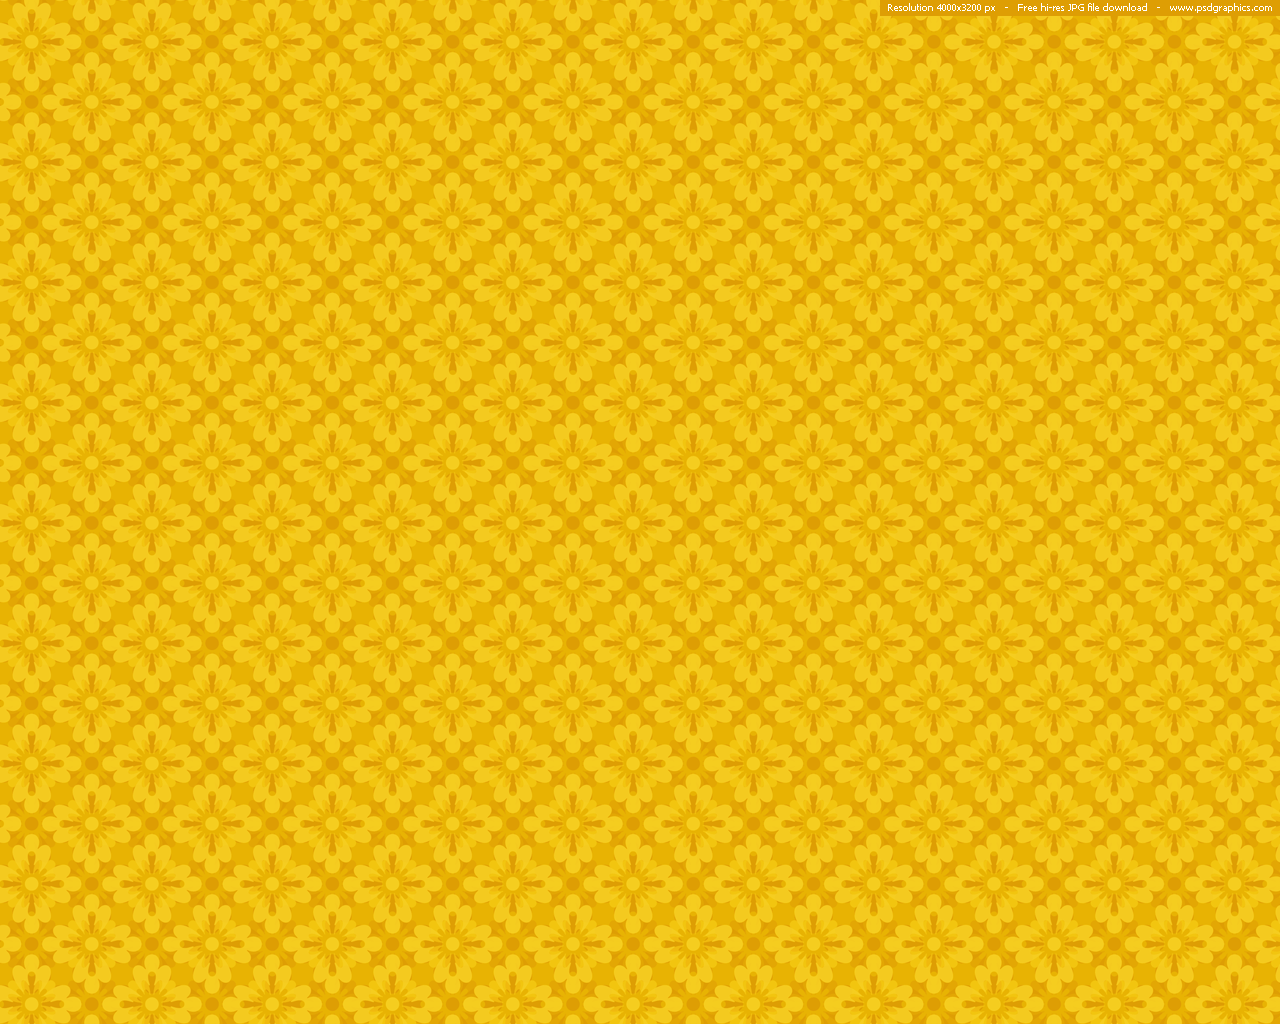 Gray and yellow Photoshop patterns PSDGraphics 1280x1024